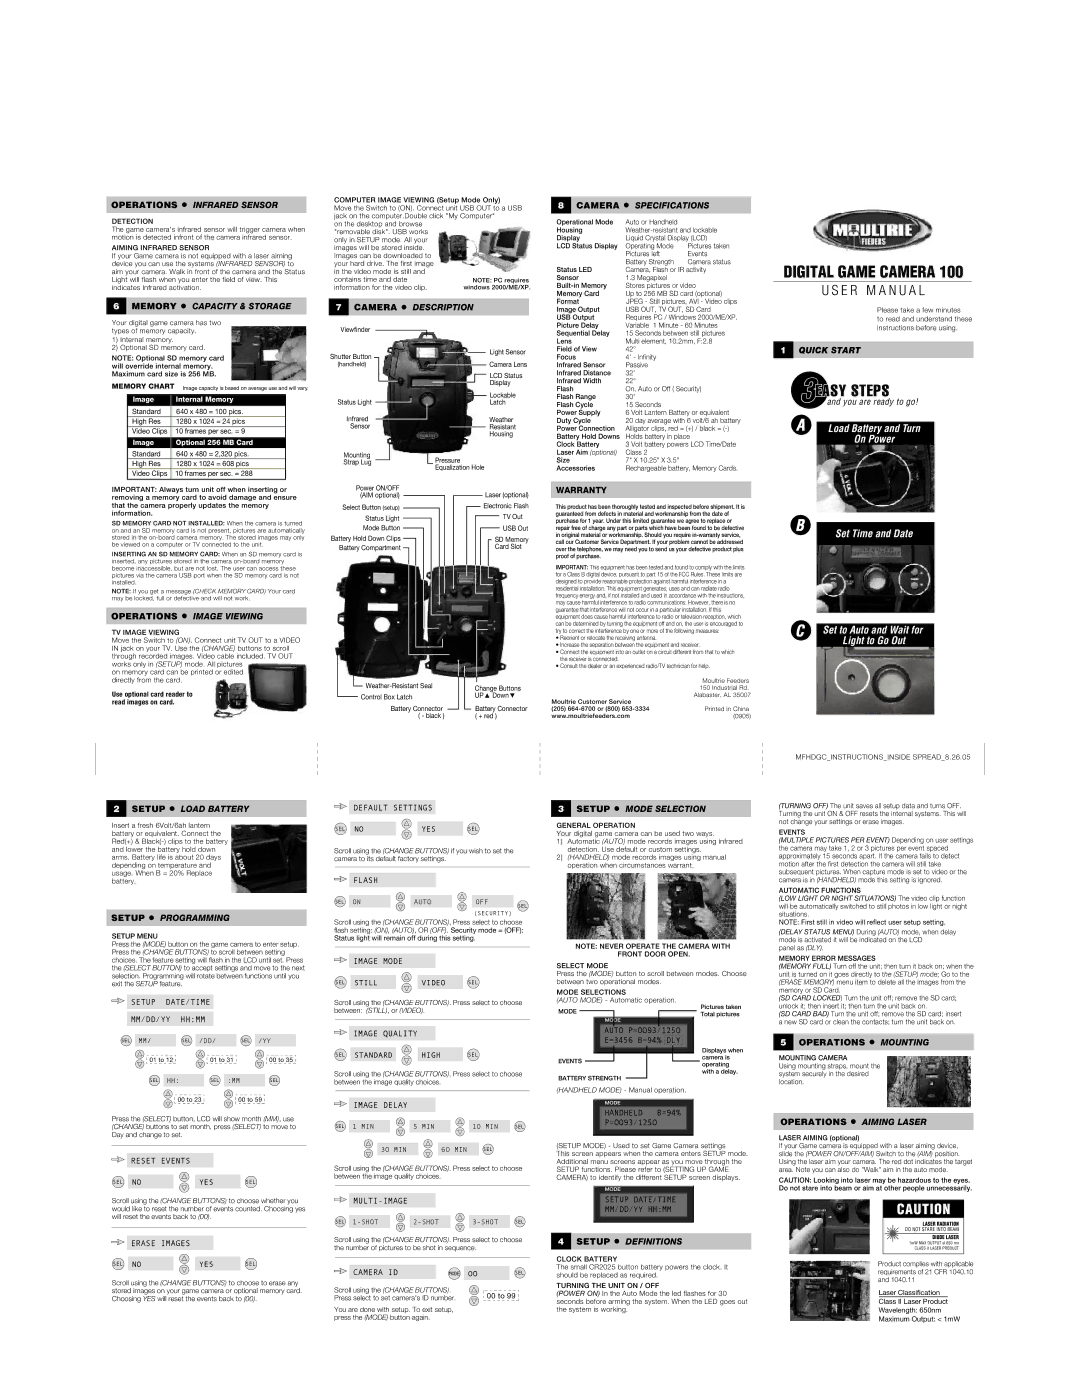 Moultrie 100 warranty Operations Infrared Sensor, Memory Capacity & Storage, Camera Description Camera Specifications 